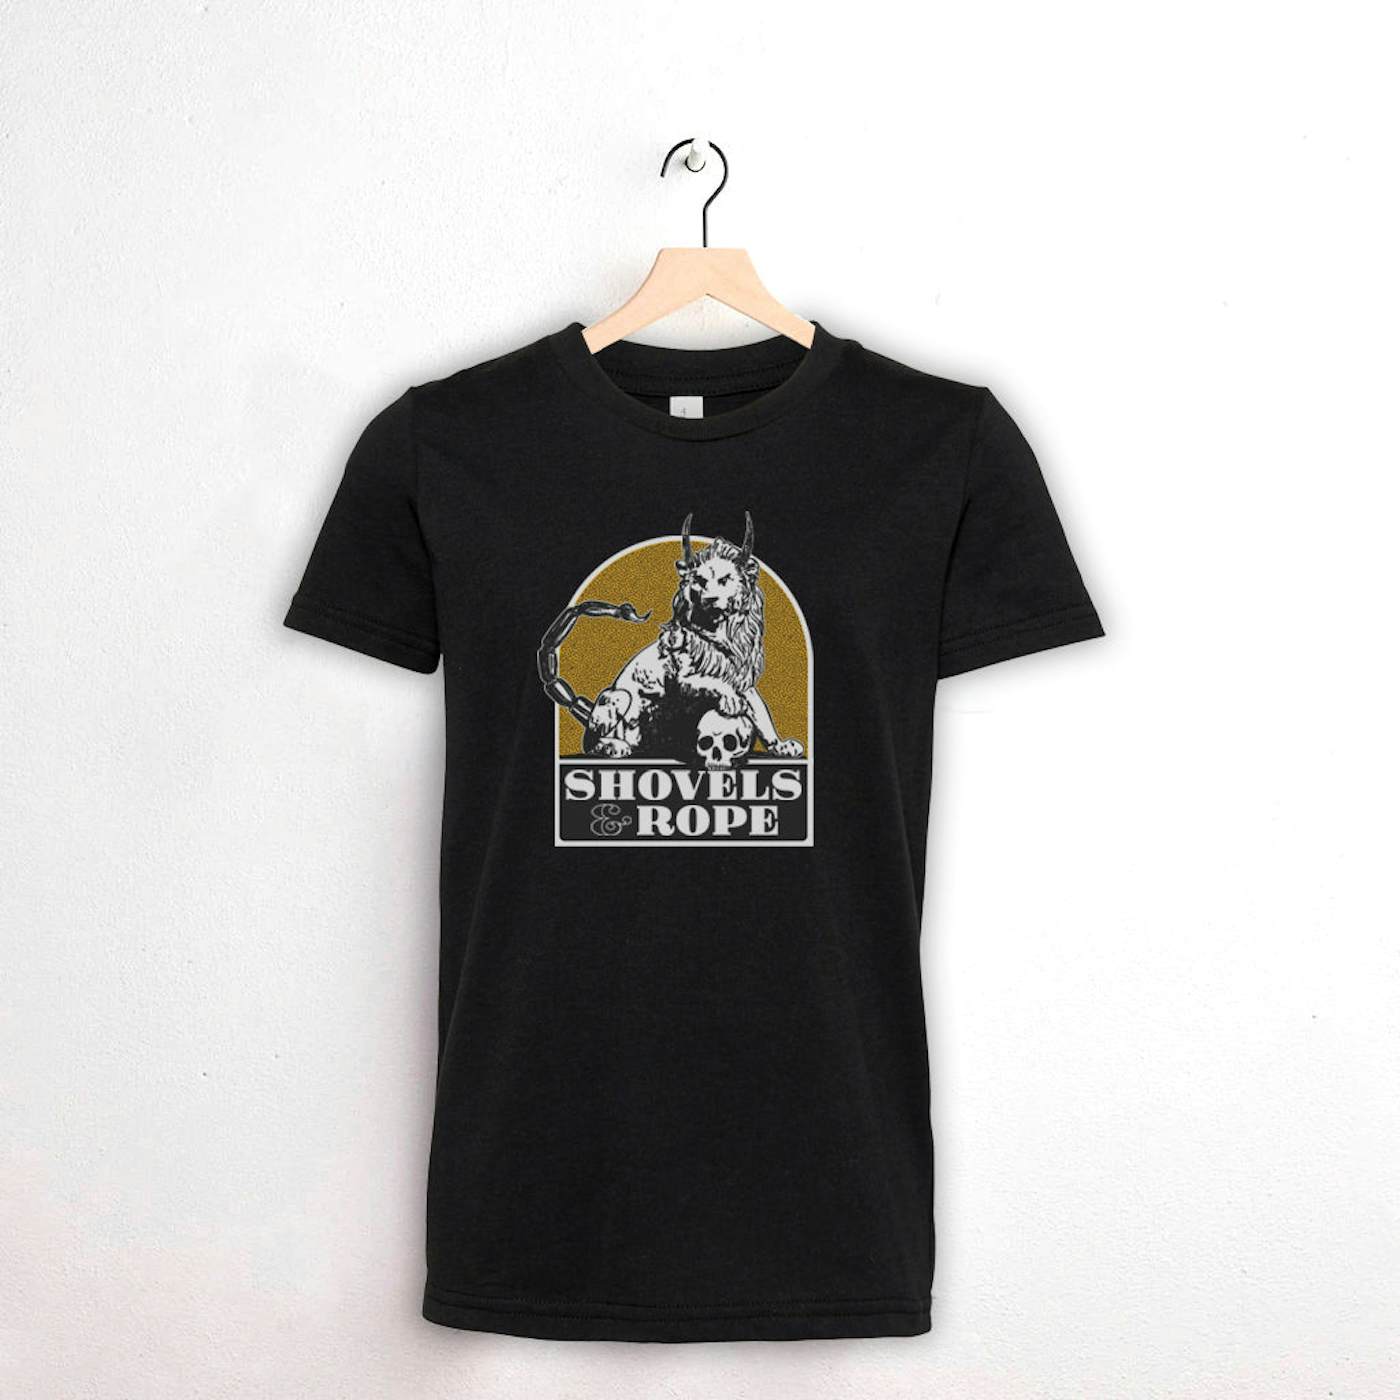 Shovels & Rope Manticore (Shirt)